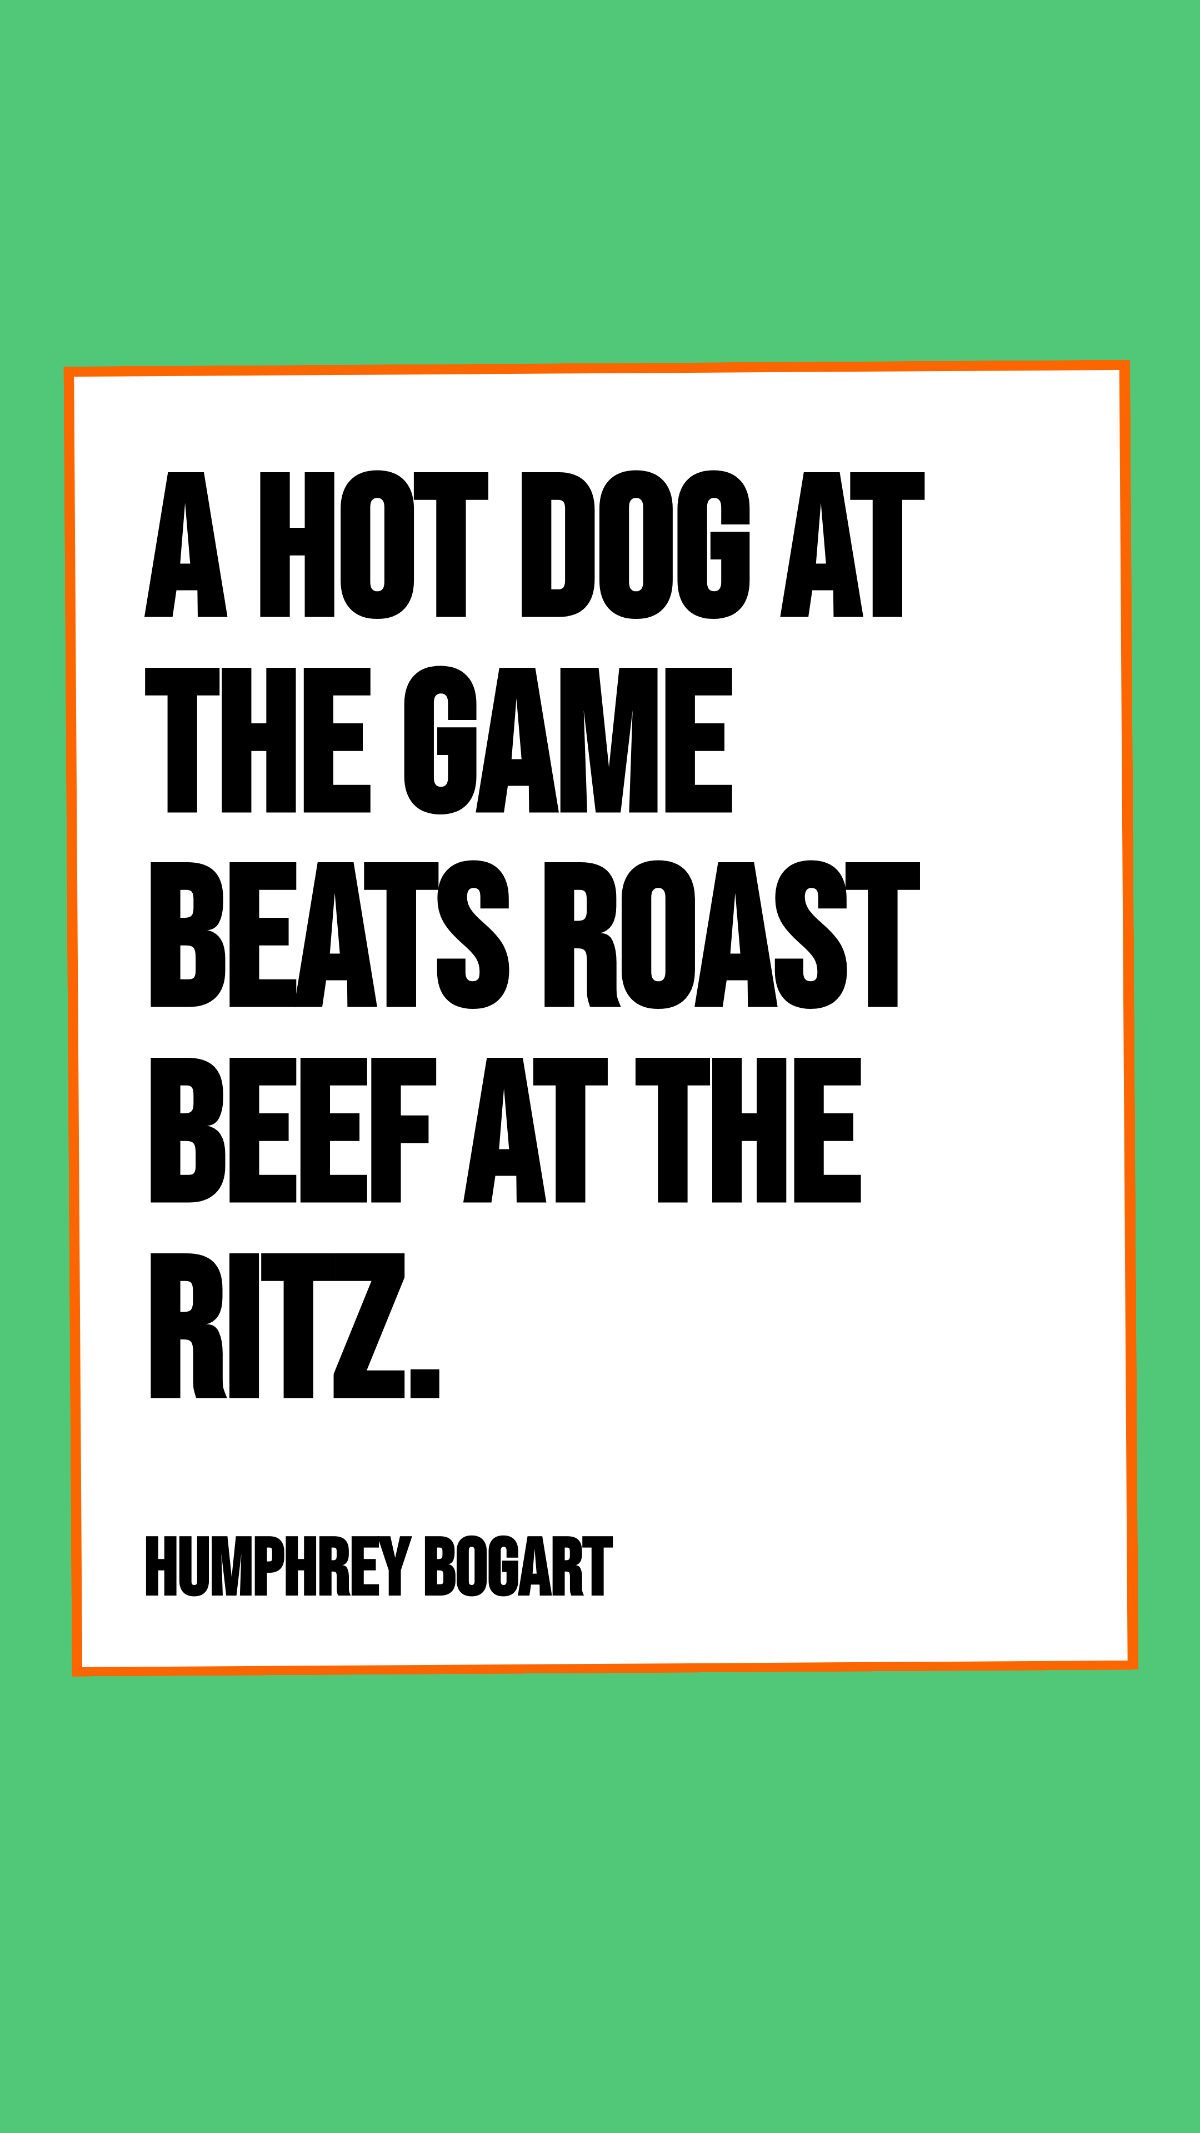 Free Humphrey Bogart - A hot dog at the game beats roast beef at the Ritz. Template